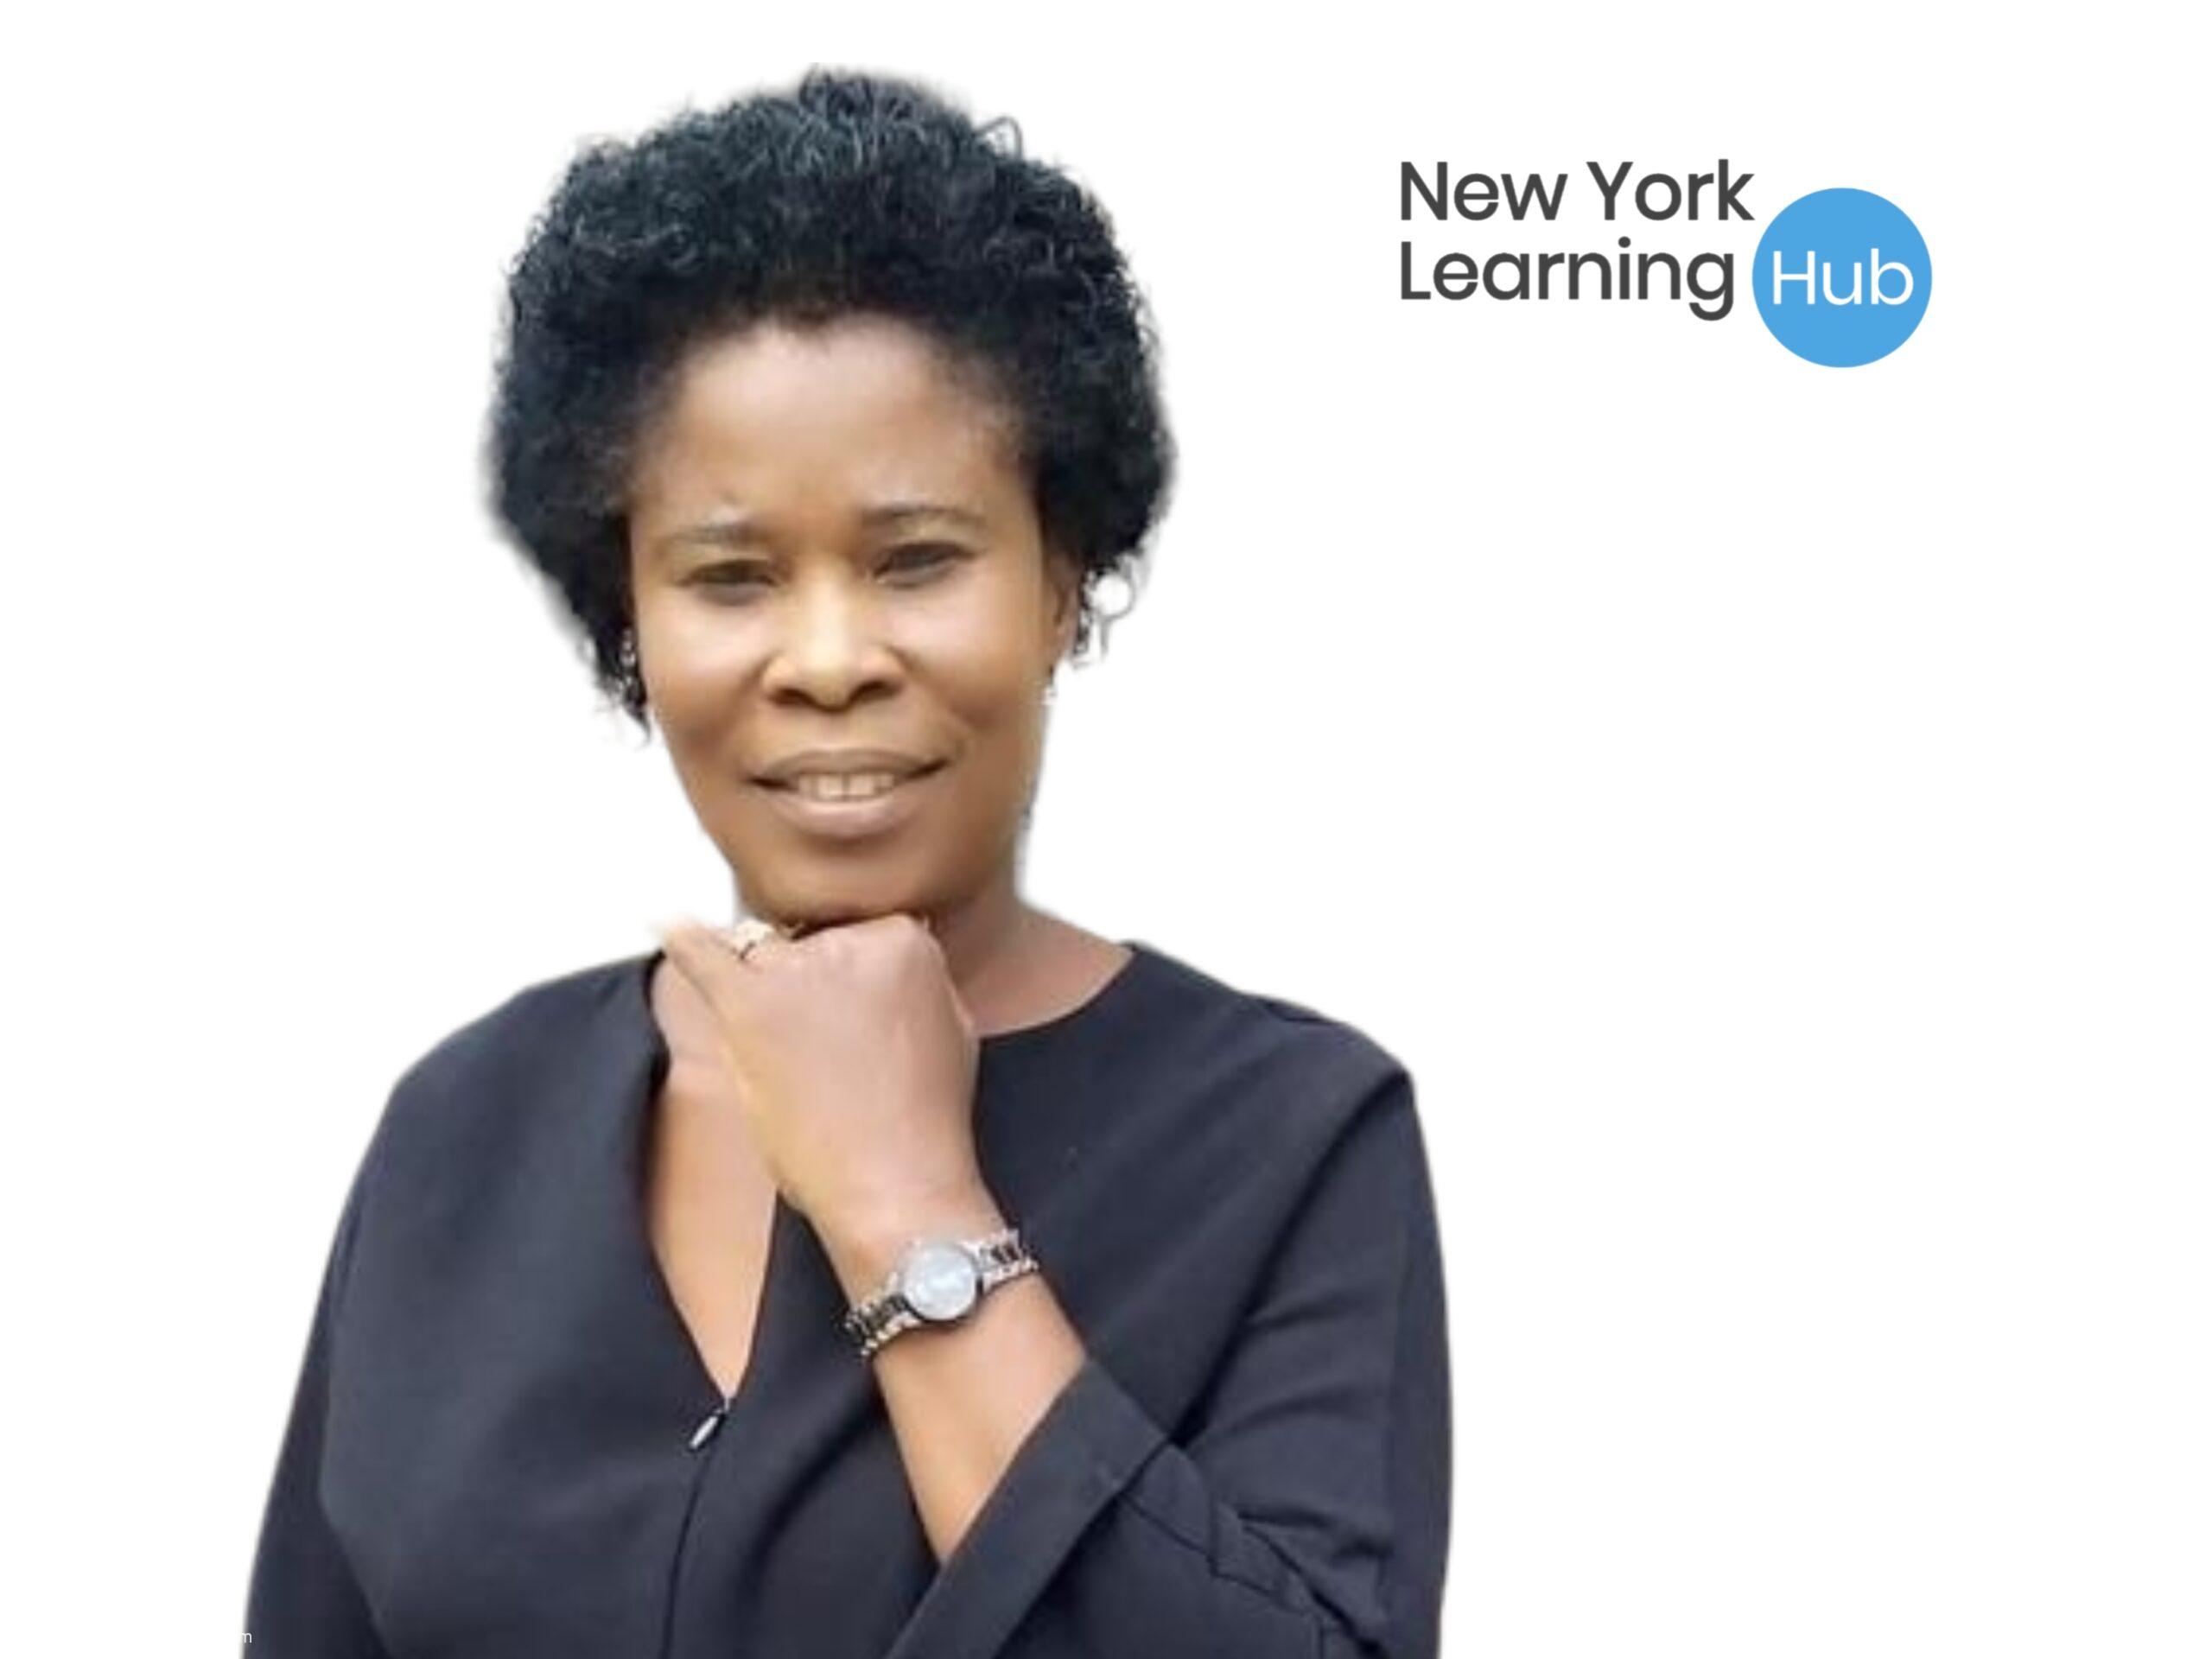 Aisha Olagbegi's Research On Social Work Shines At NYLH